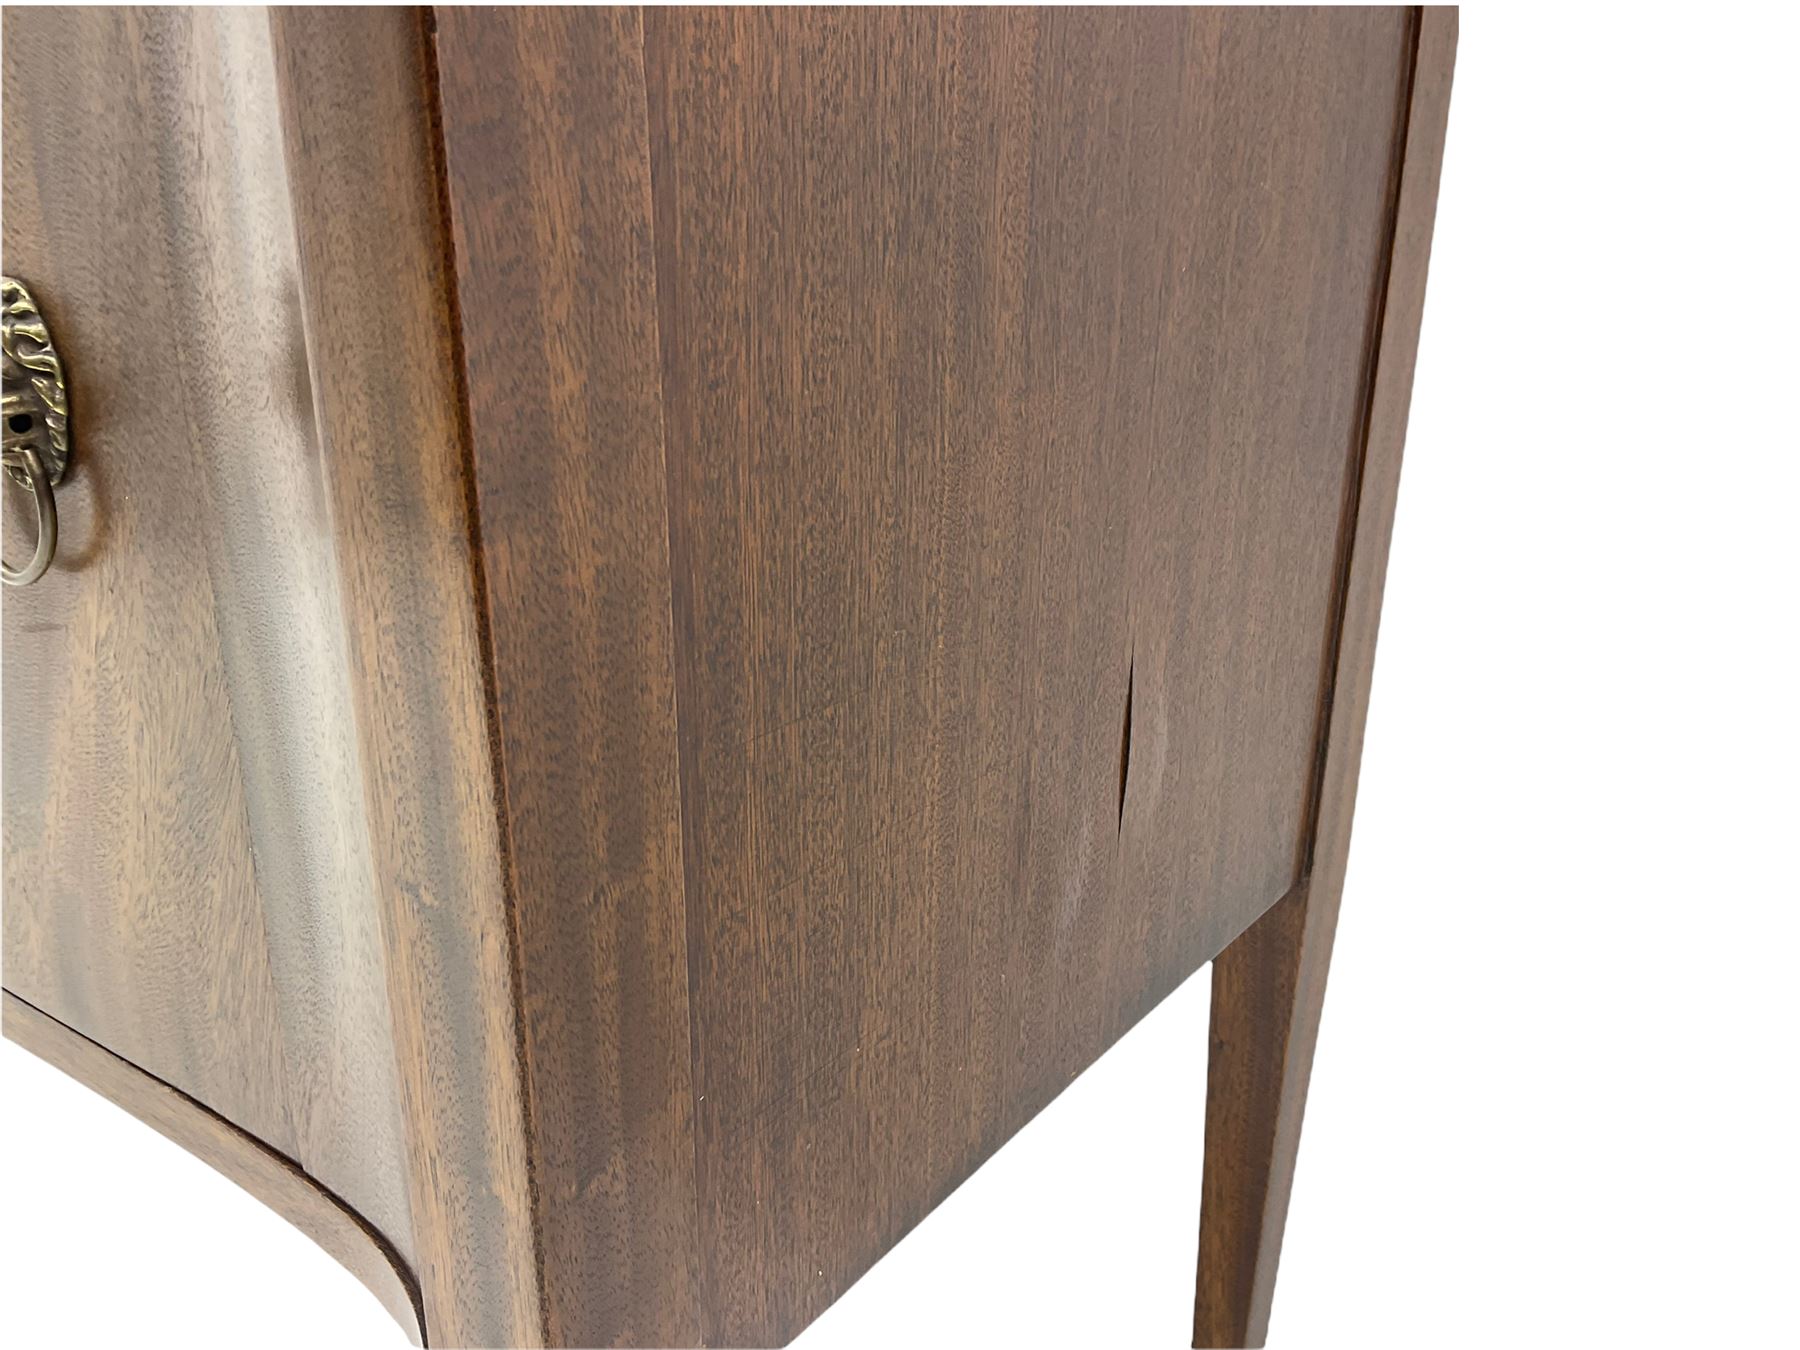 Regency design mahogany serpentine front sideboard - Image 4 of 7